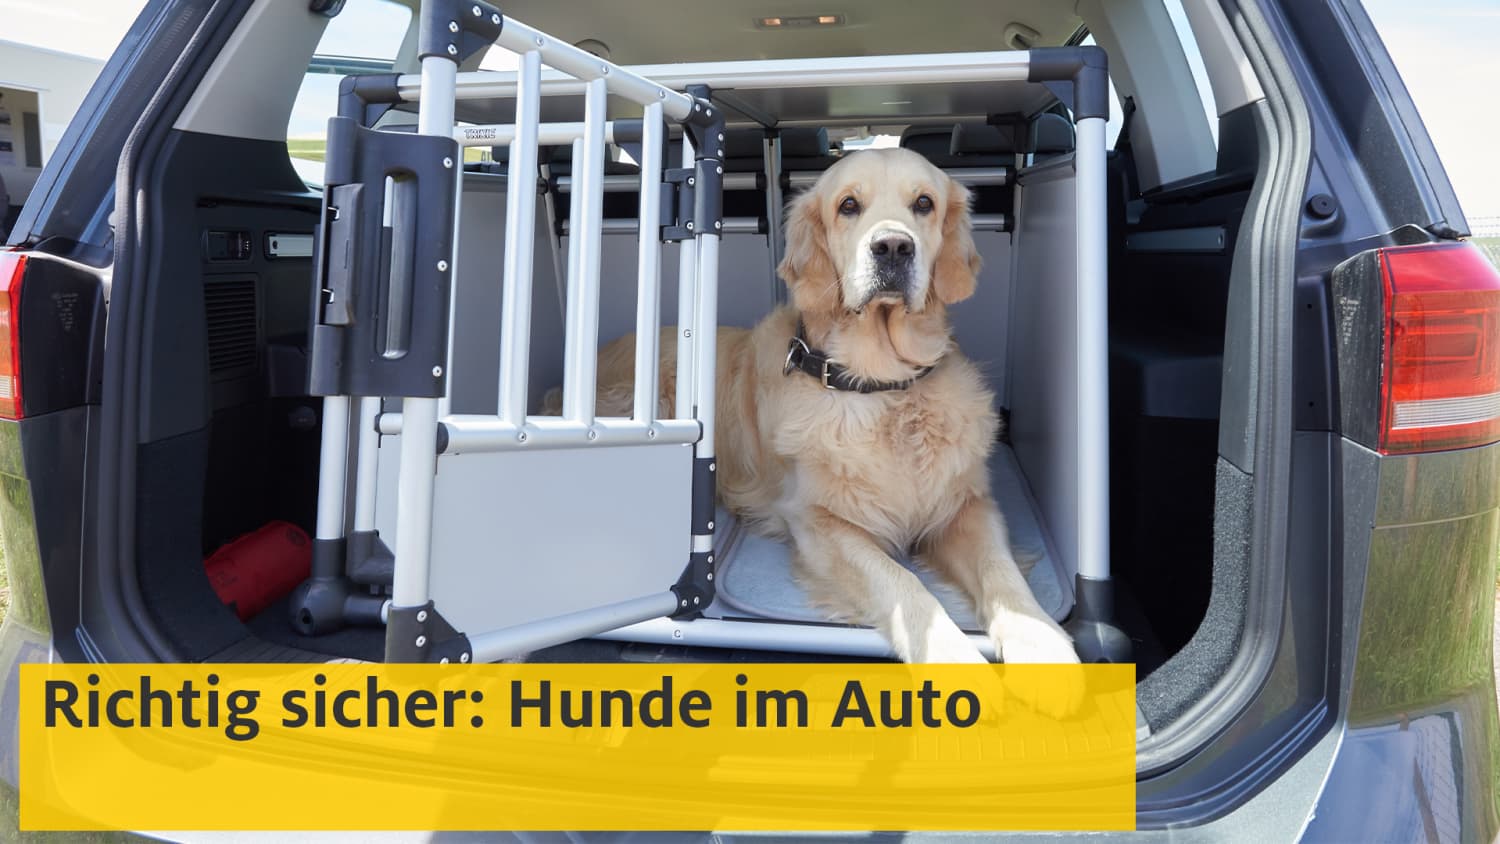 Hund im Hundetransport-Systeme | ADAC